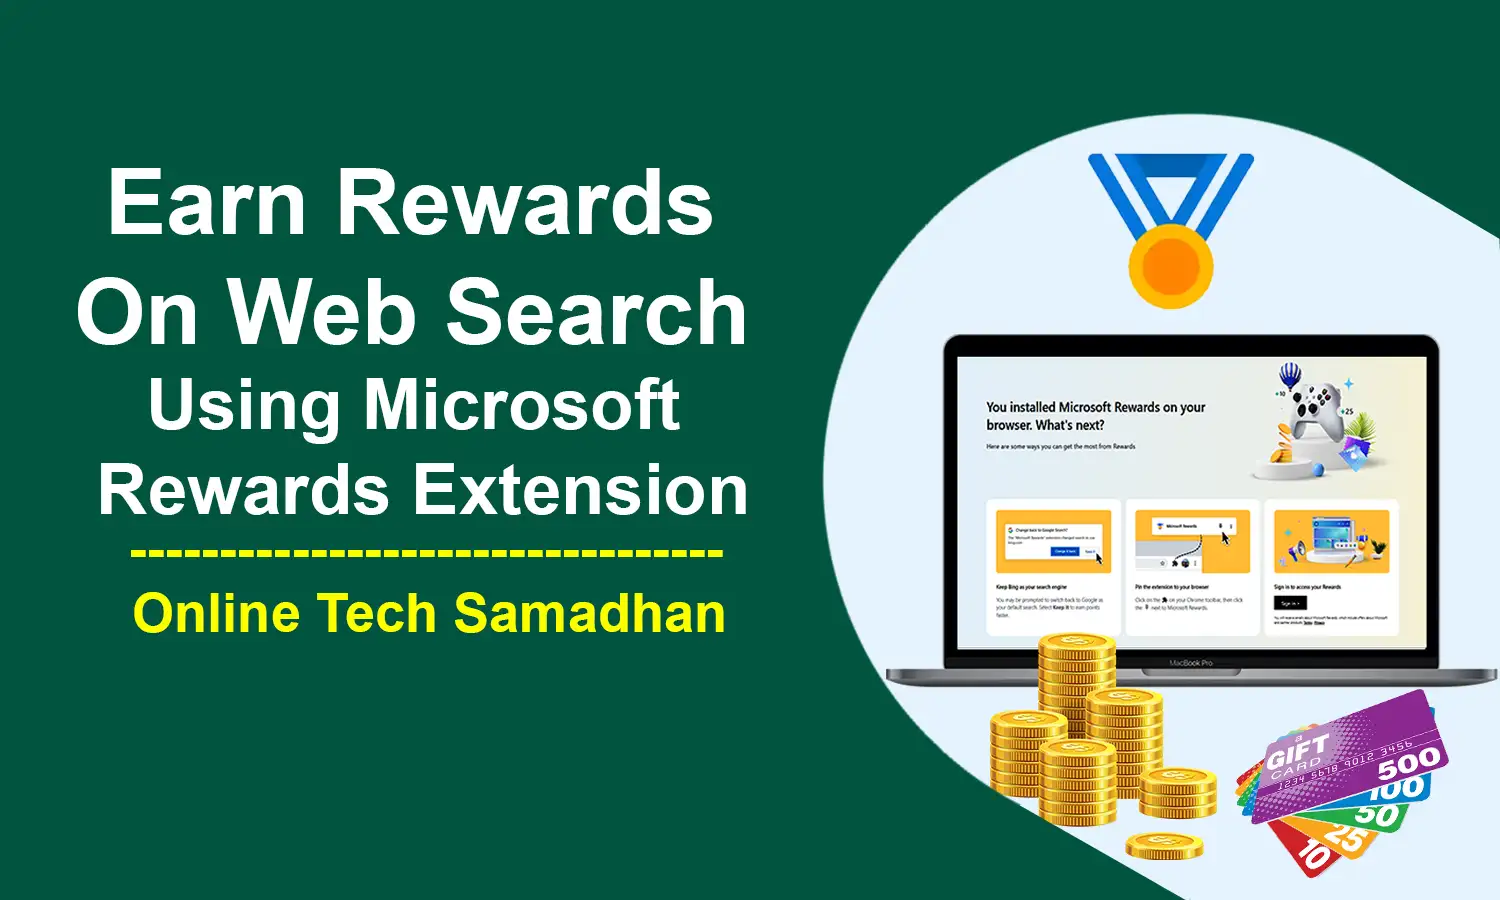 Microsoft Rewards Extension